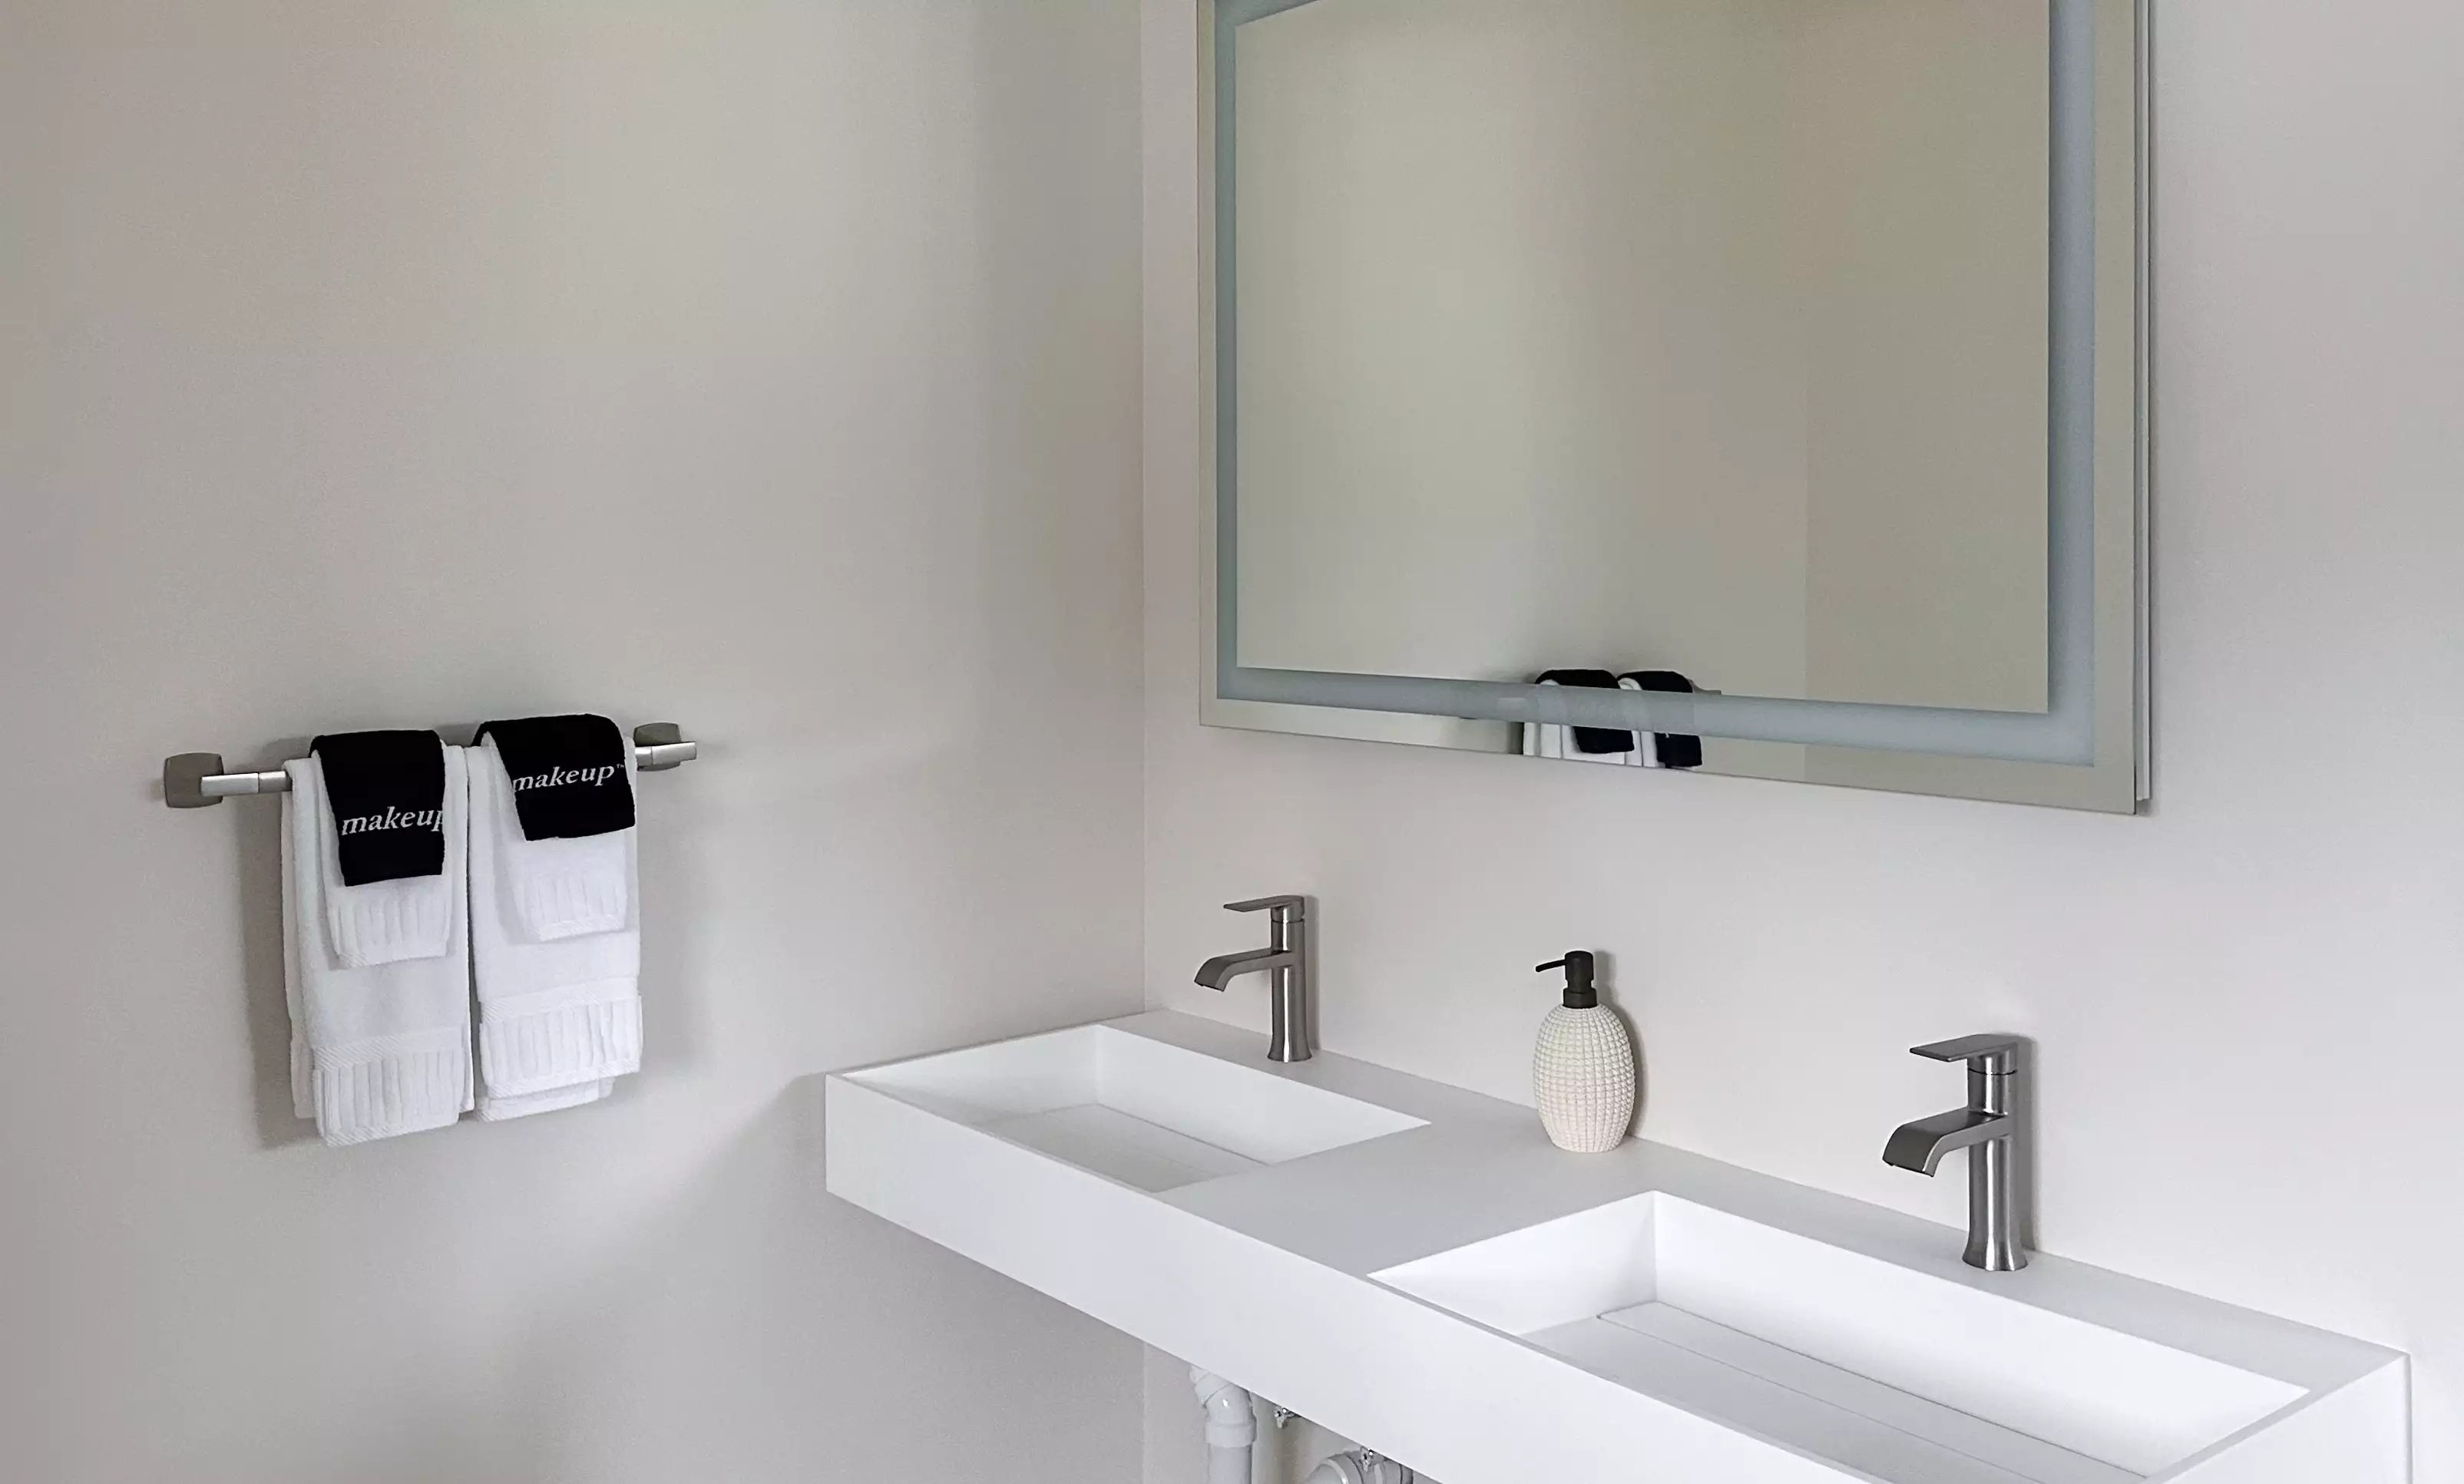 Bathroom vanity with two sinks